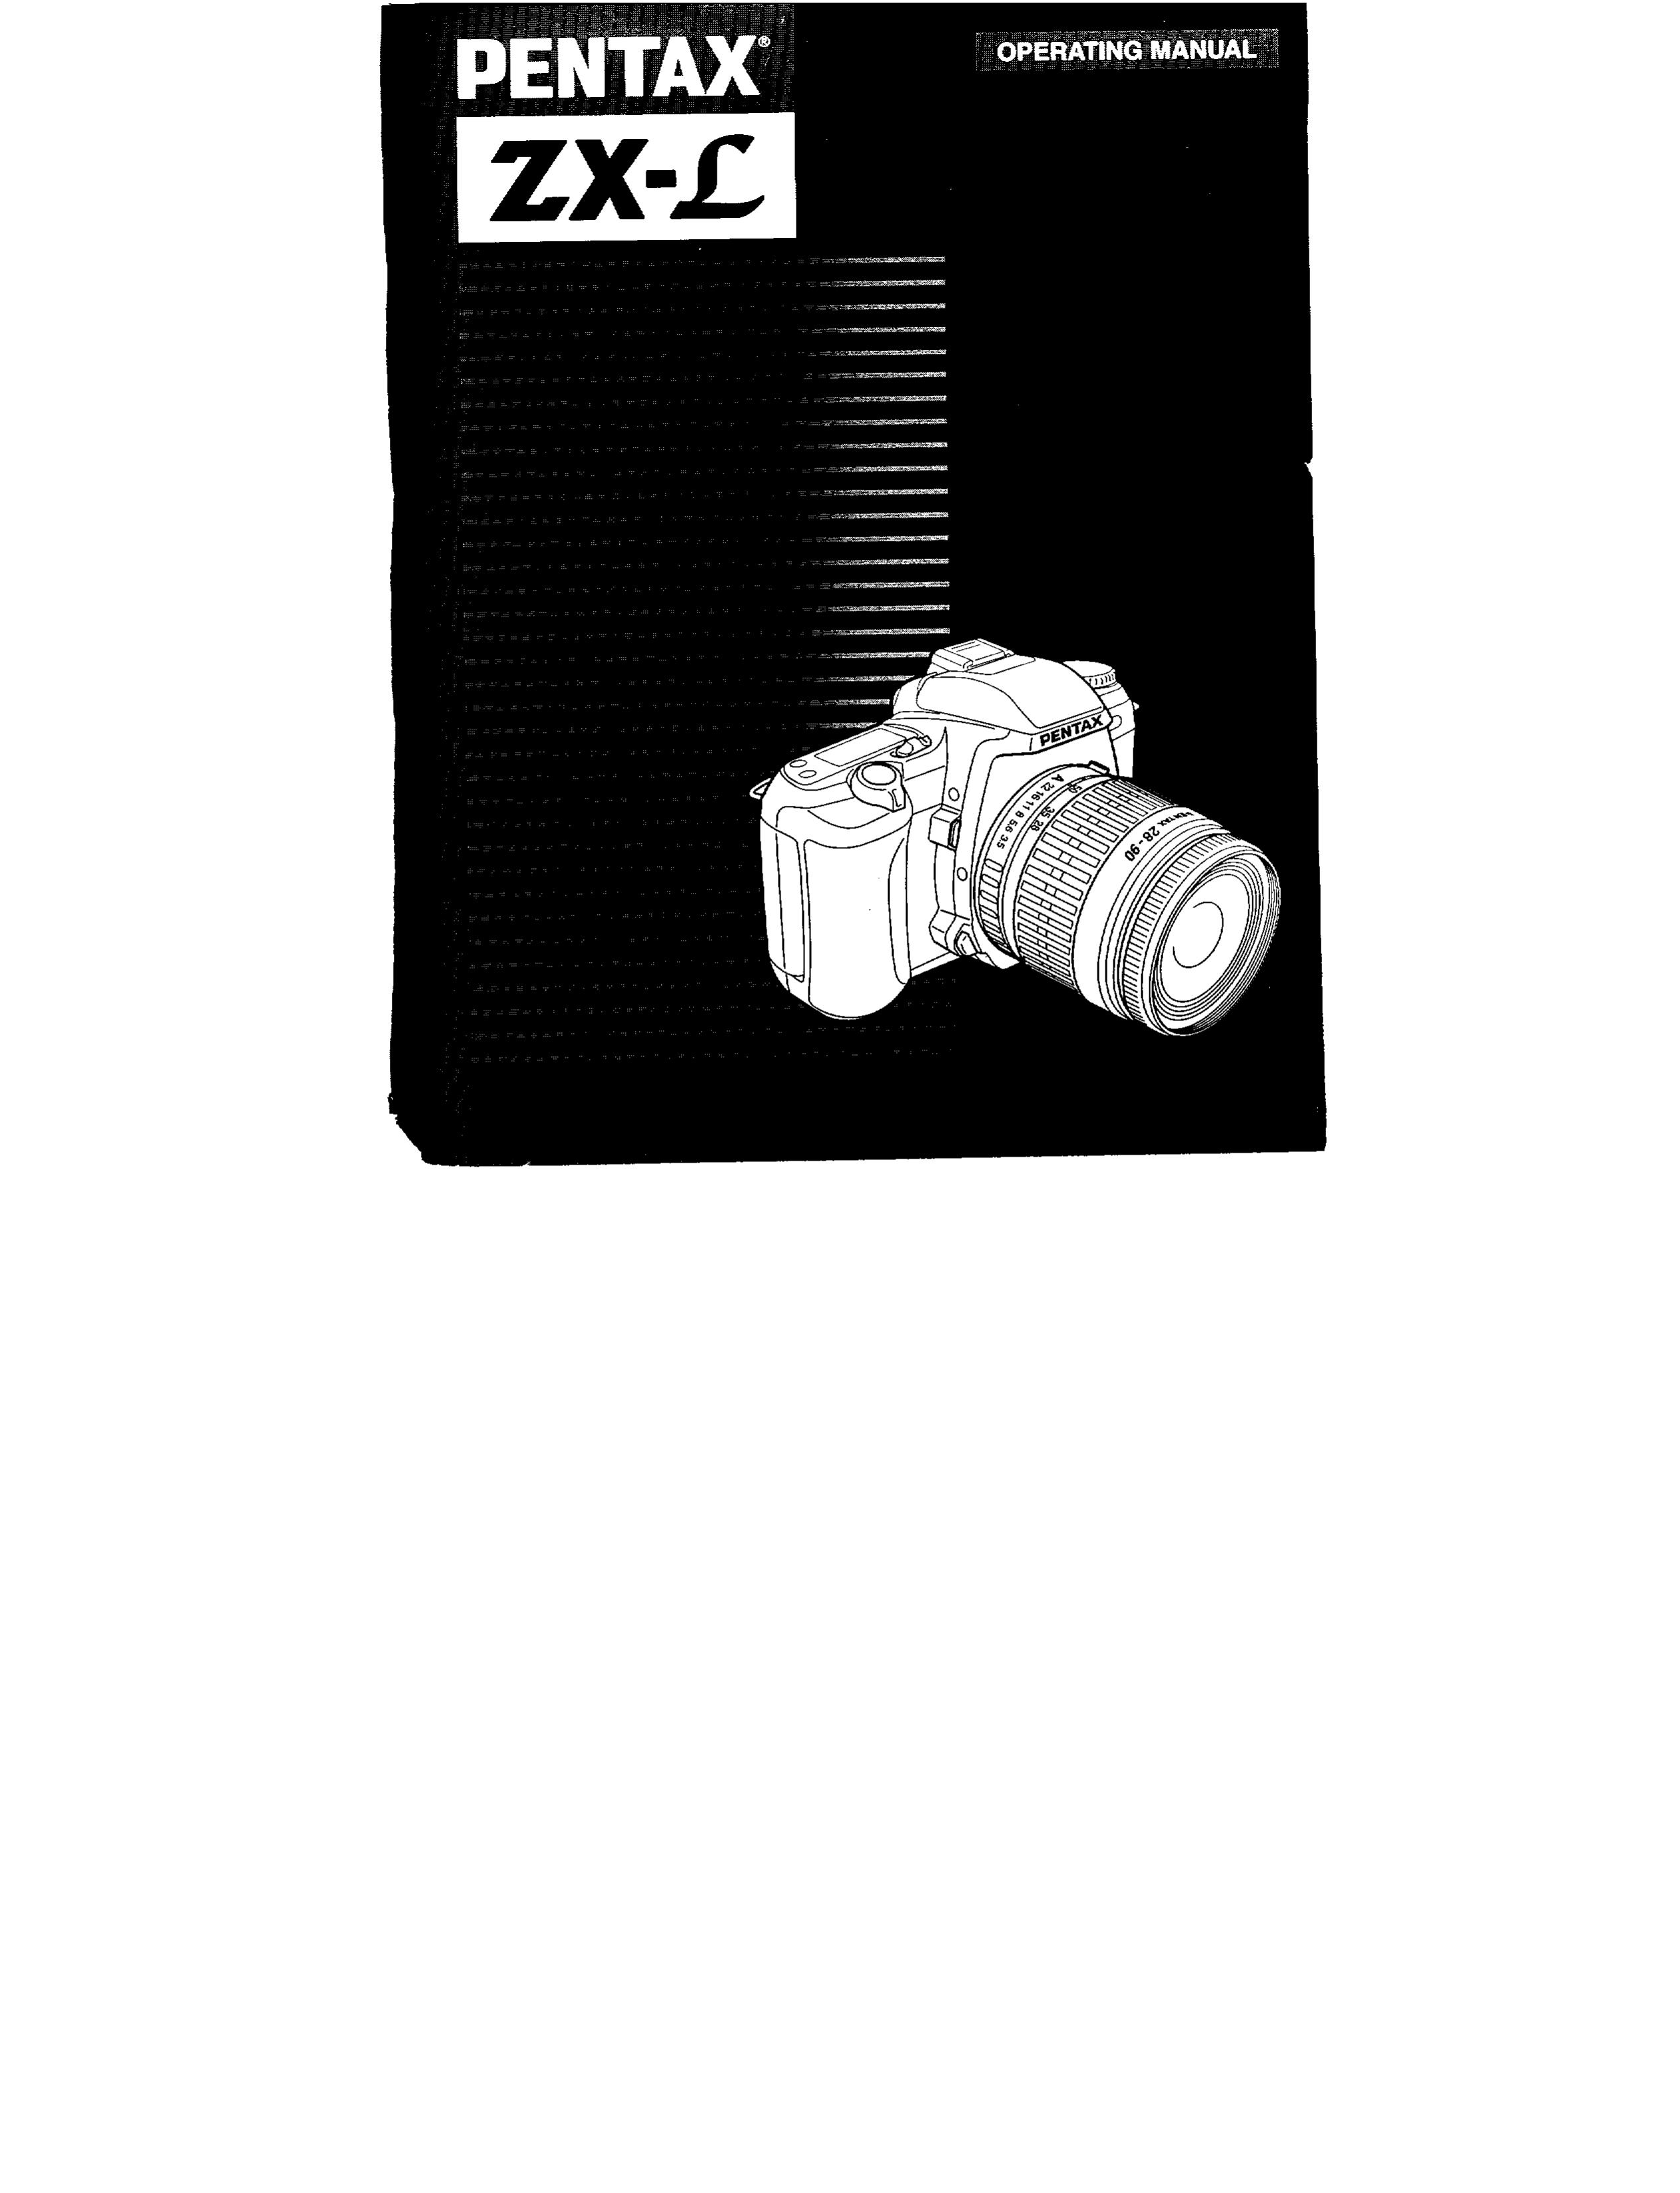 Pentax ZX-L Camcorder User Manual